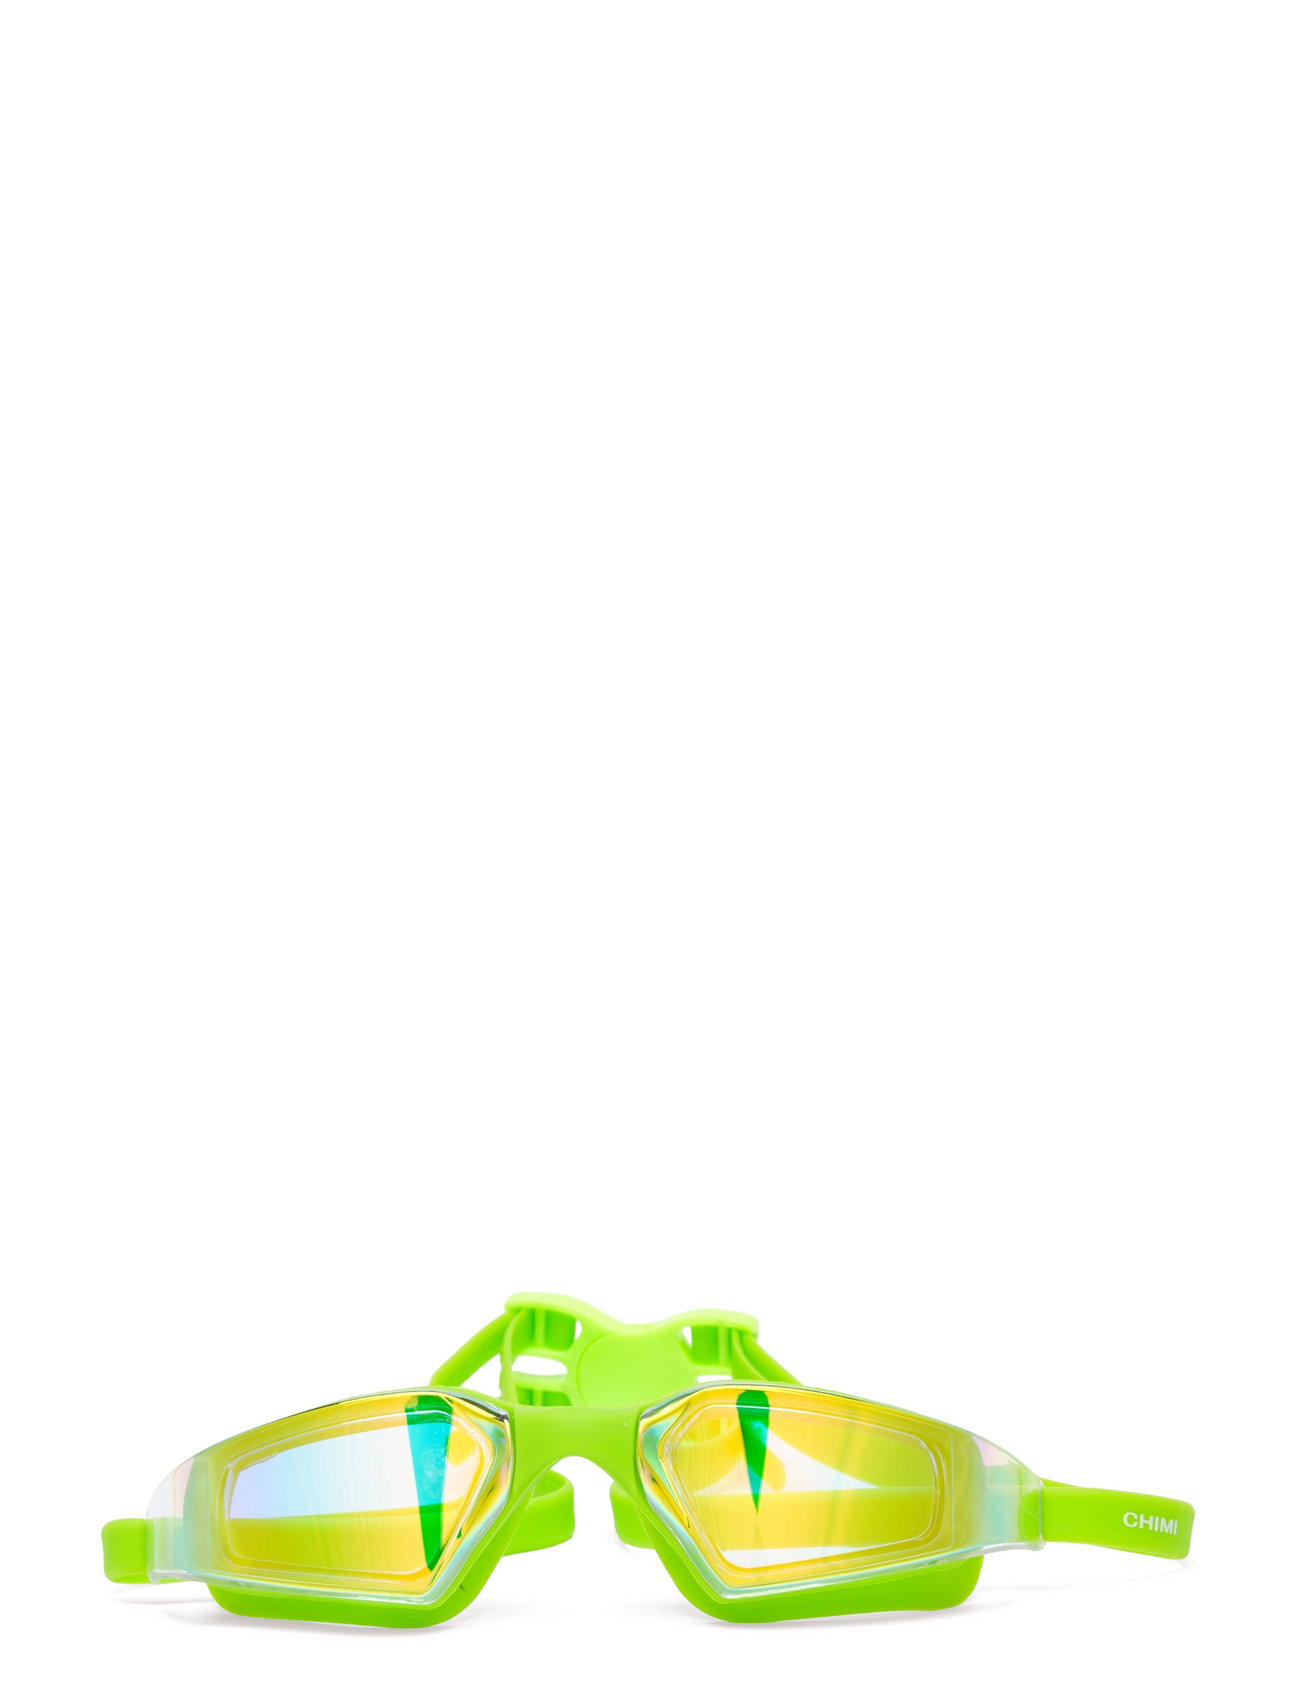 Swim Goggle Lime Green Accessories Sports Equipment Swimming Accessories Green CHIMI